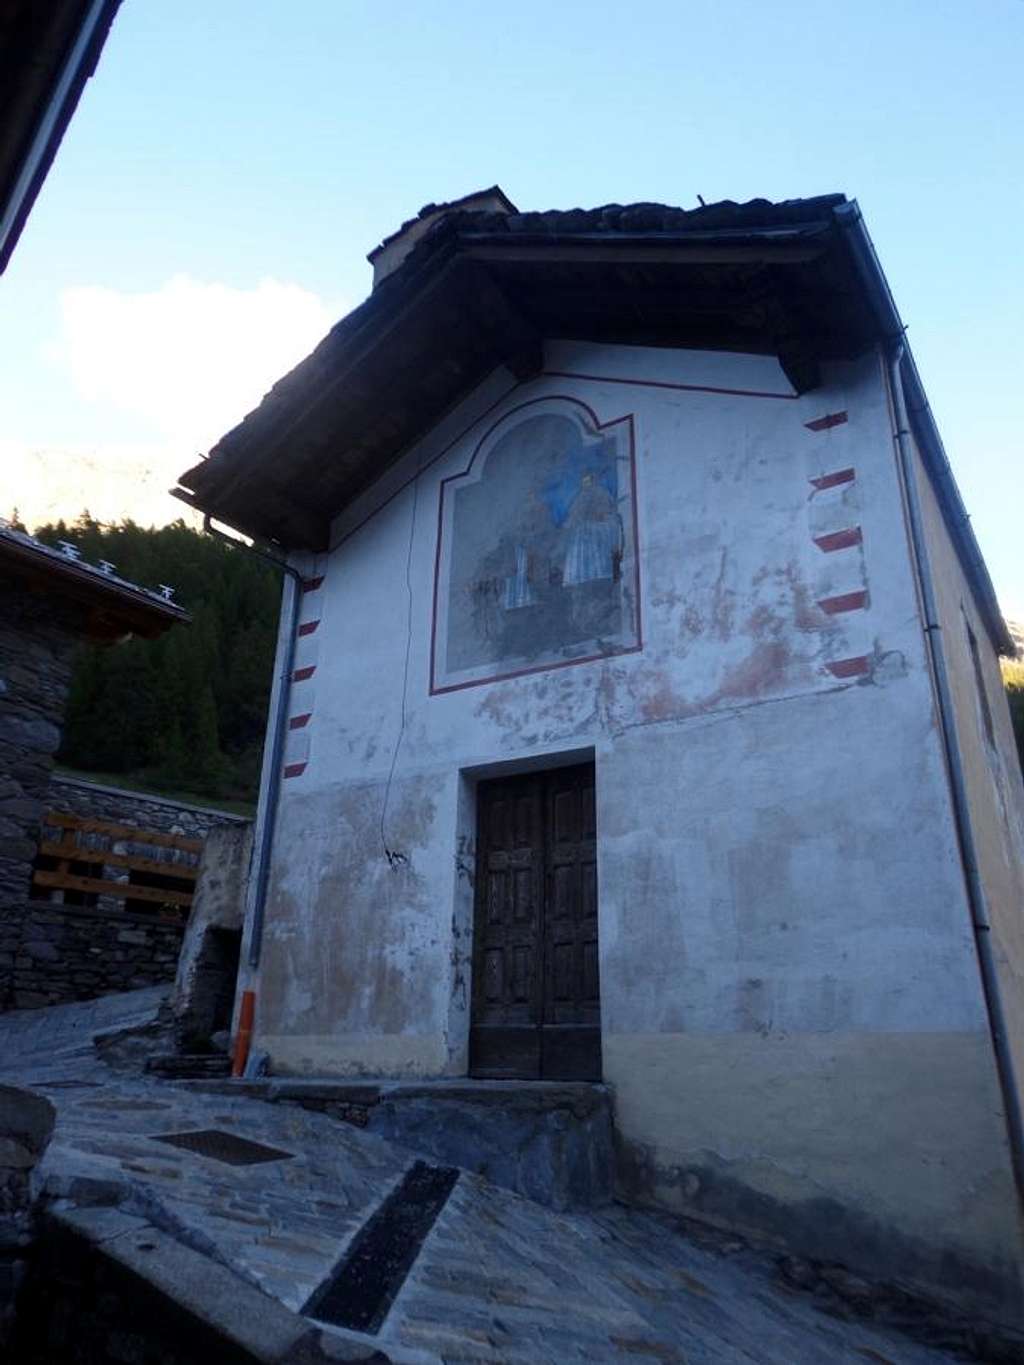 (Valgrisenche) Céré Chapel with a fresco in front 2015